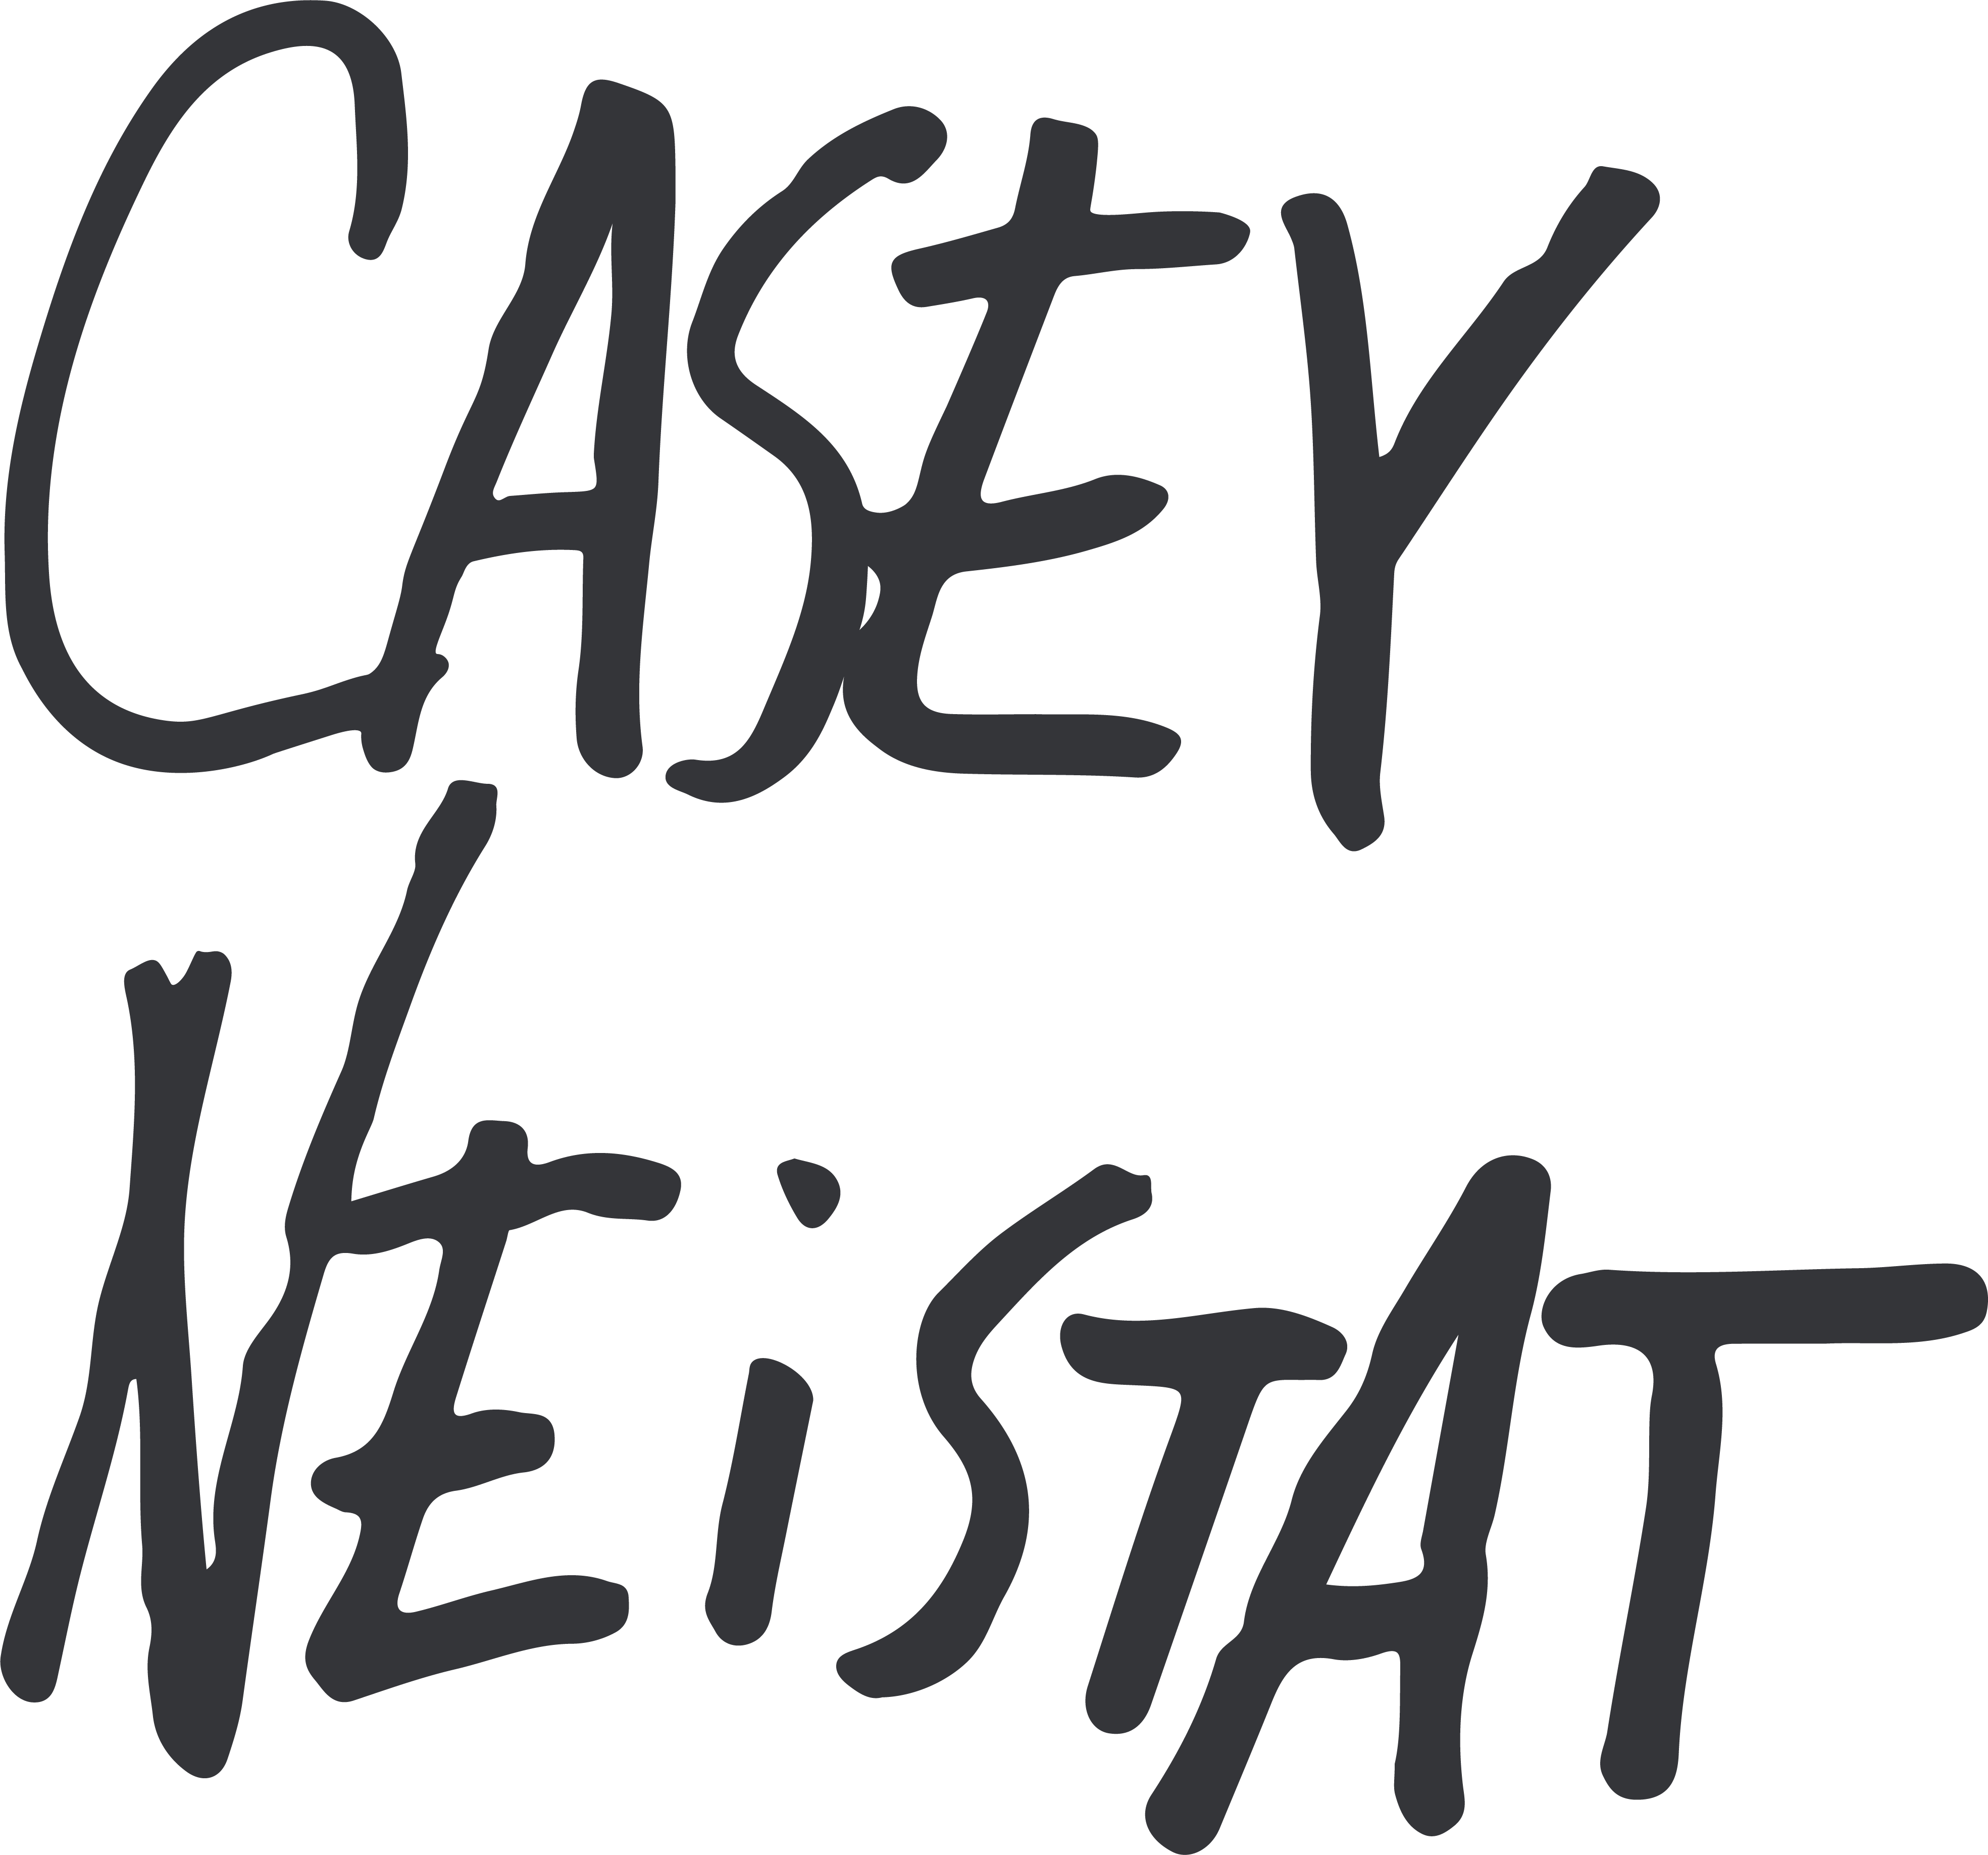 Casey's Logo - Make It Count – Casey Neistat's Watermark – Ant.cat